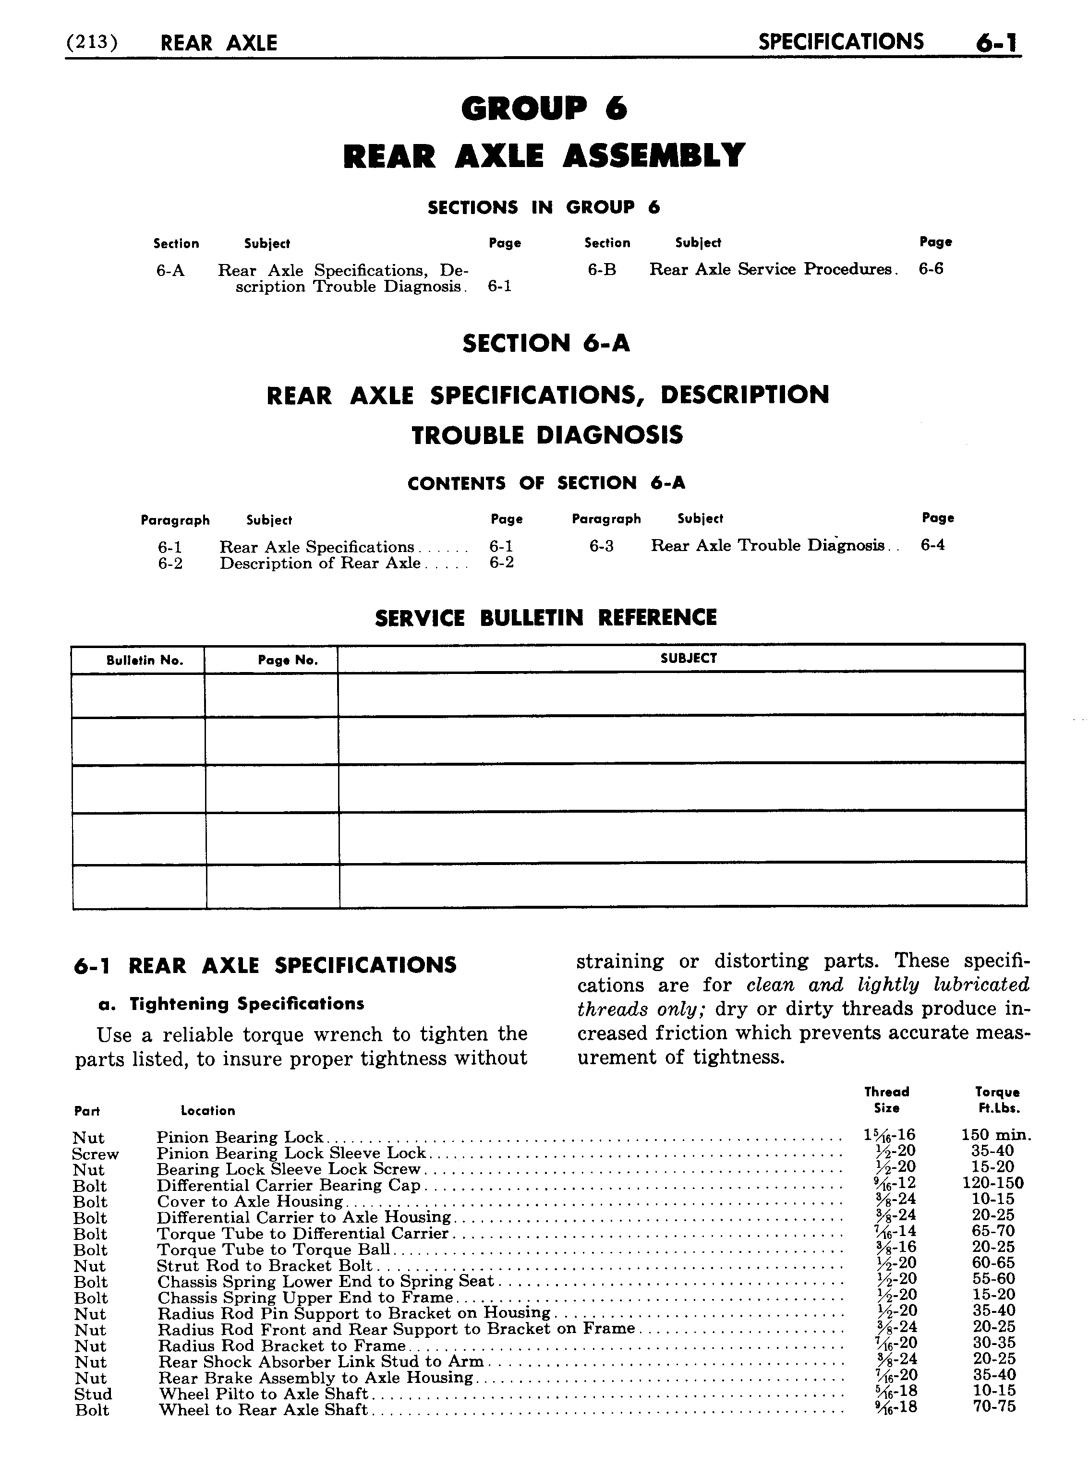 n_07 1954 Buick Shop Manual - Rear Axle-001-001.jpg